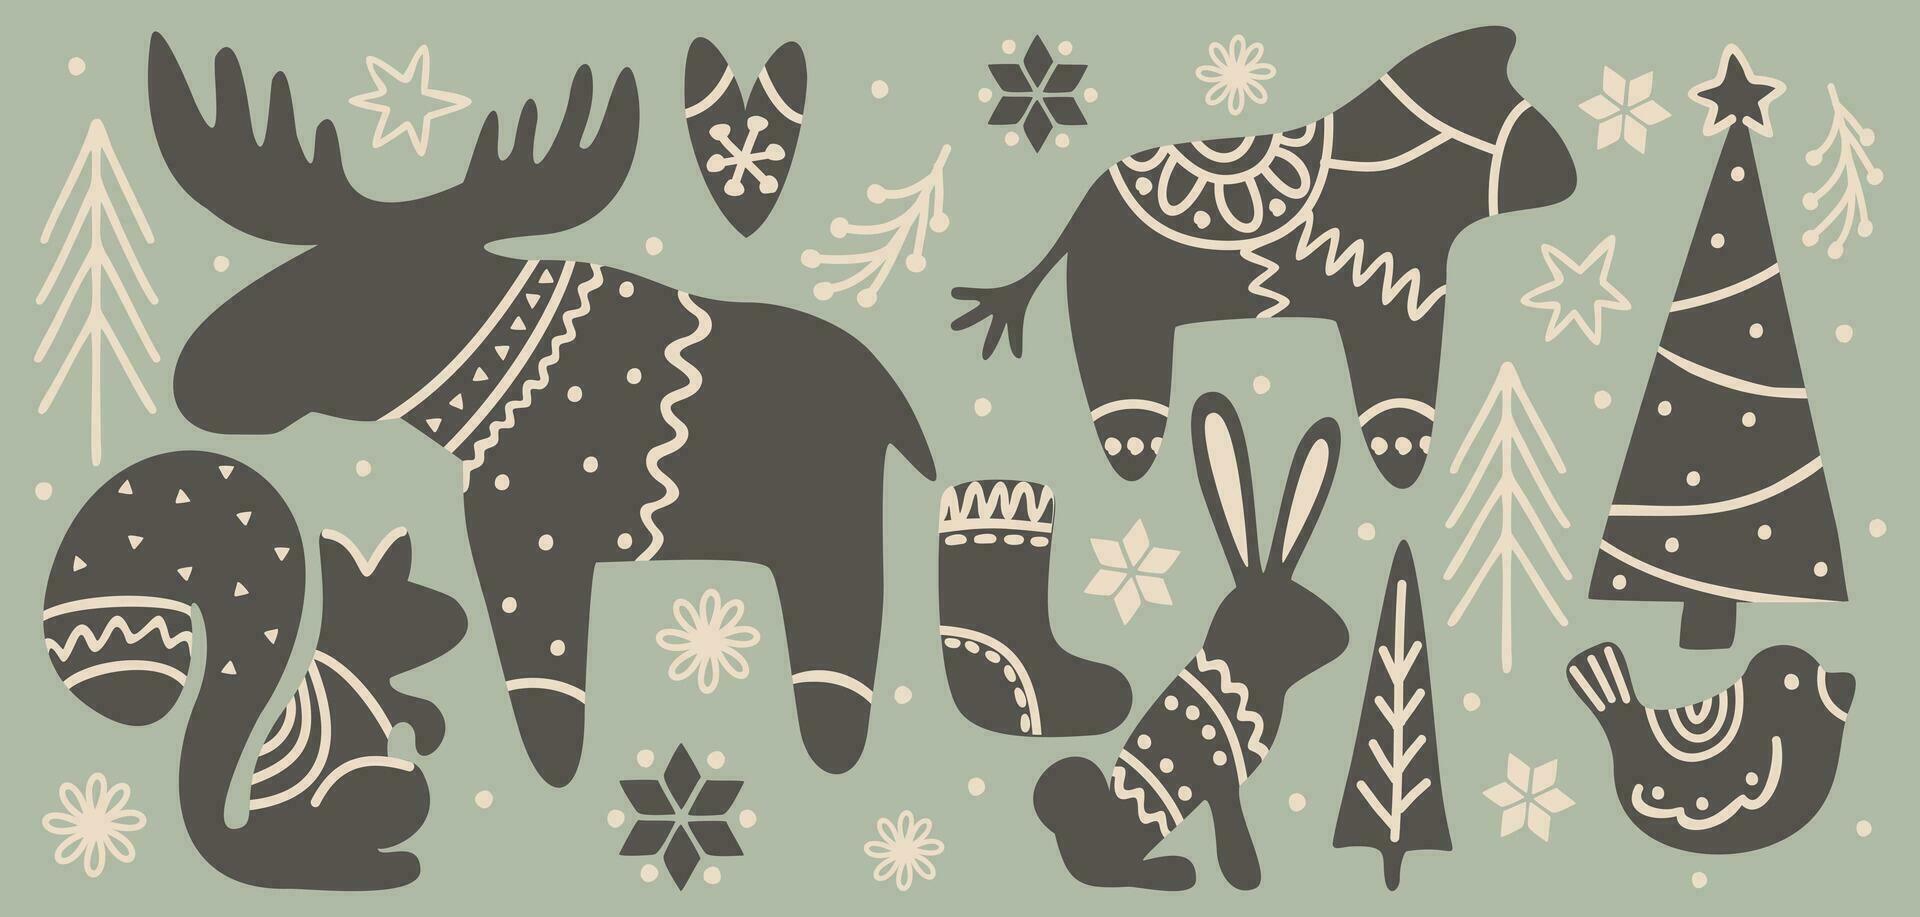 Scandinavian Christmas. Vector set of decorative elements. Animals, trees, snowflakes in scandinavian style